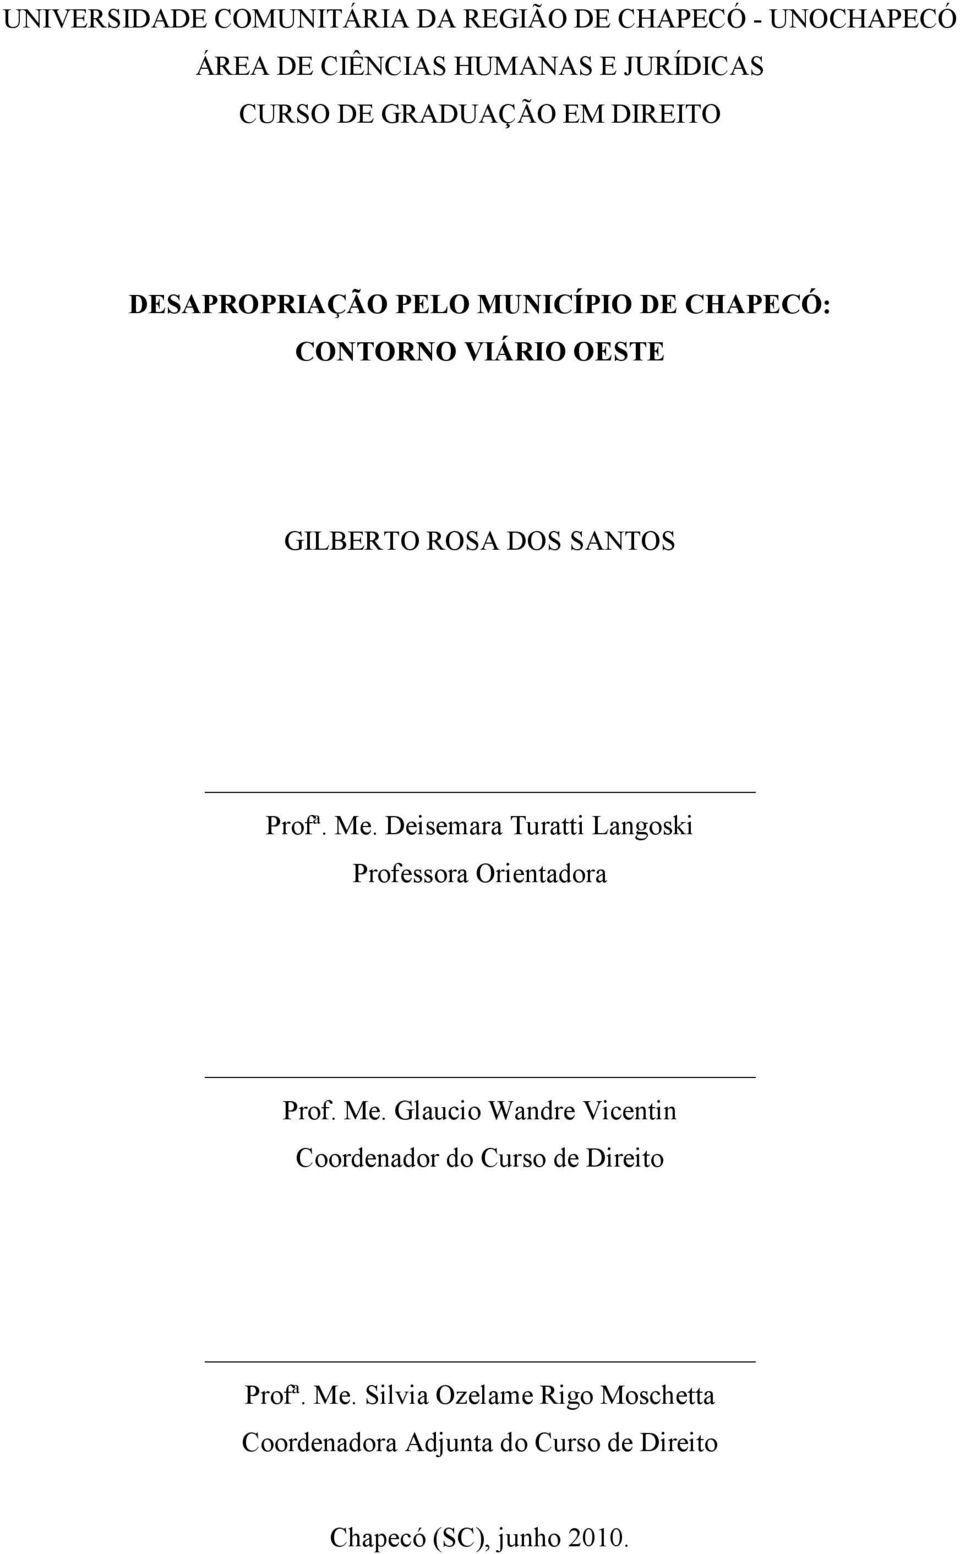 Profª. Me. Deisemara Turatti Langoski Professora Orientadora Prof. Me. Glaucio Wandre Vicentin Coordenador do Curso de Direito Profª.